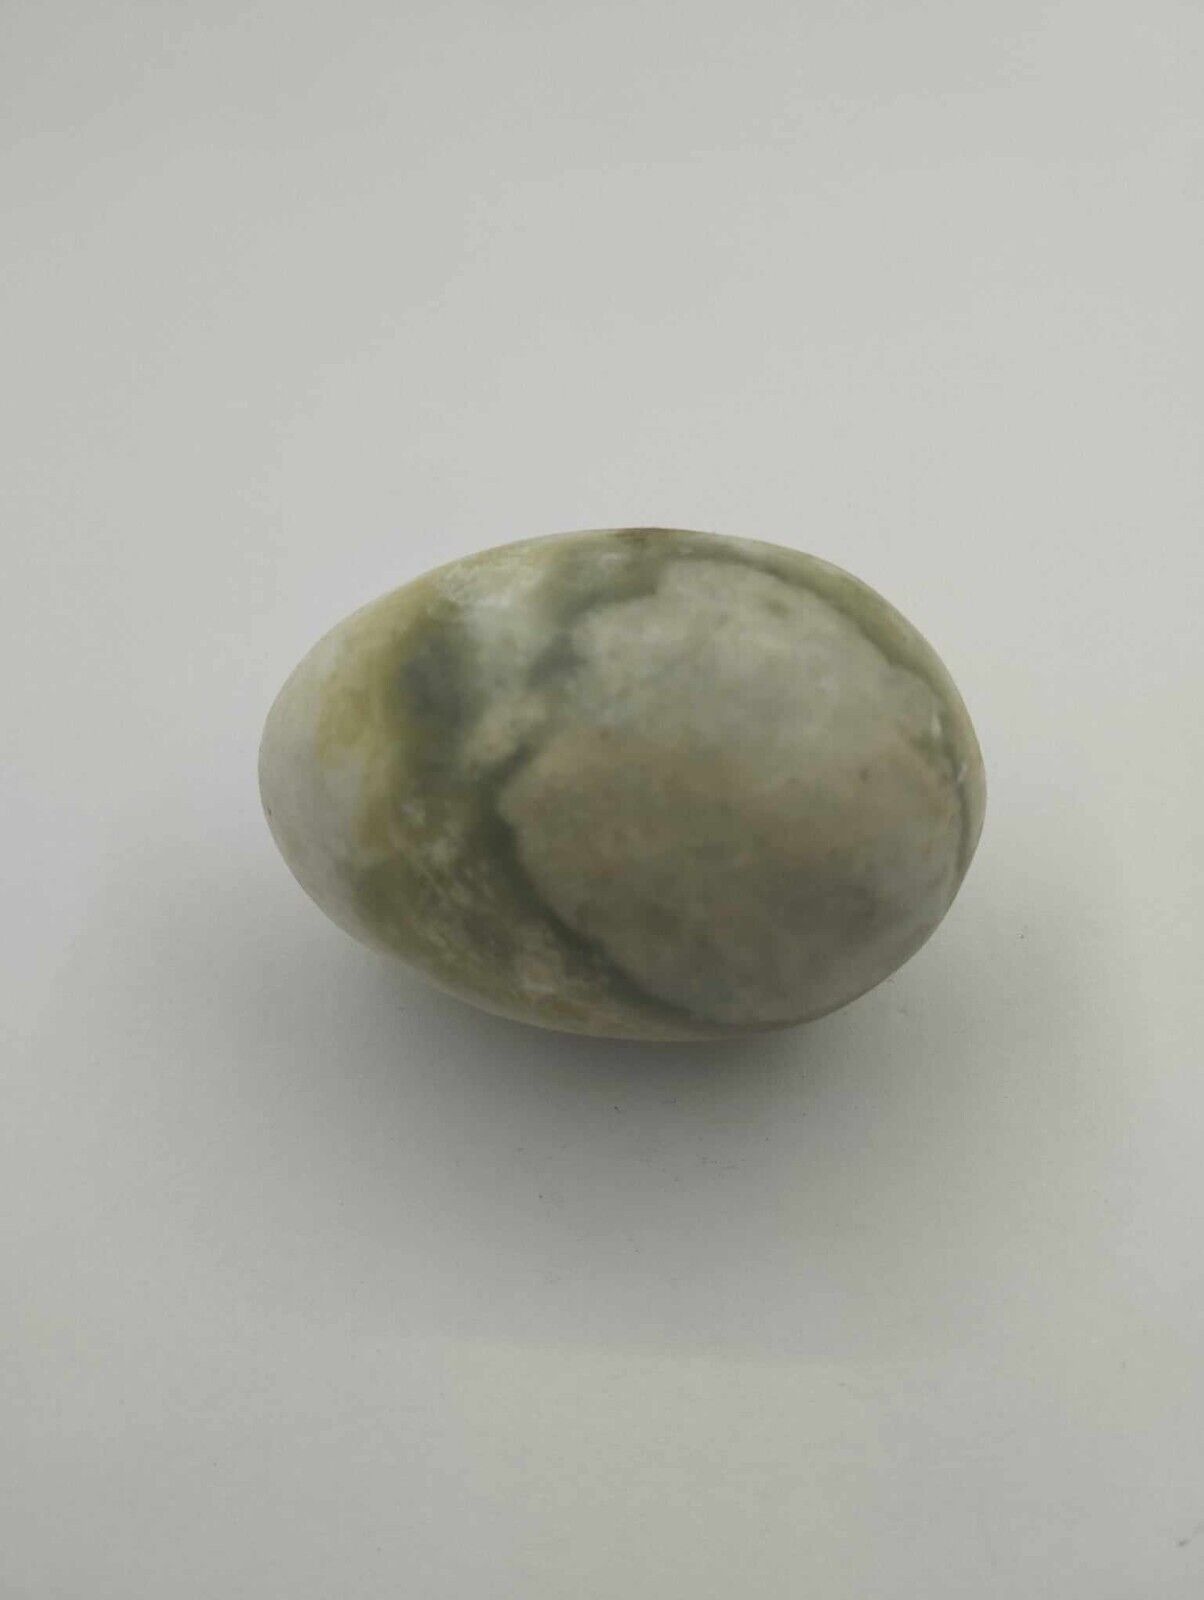 Vintage stone egg shaped home decor green